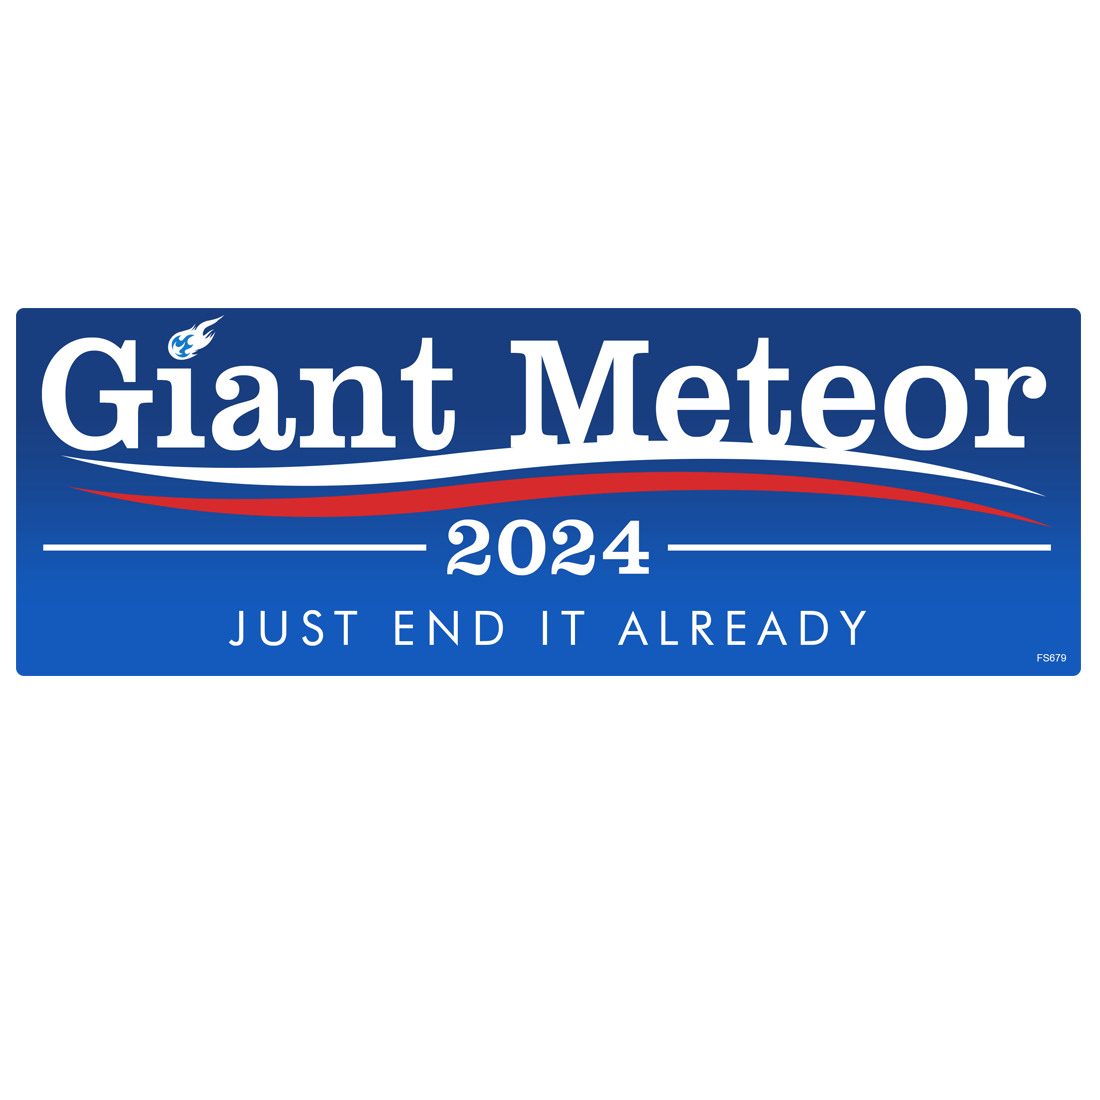 Giant Meteor 2024 Sticker - Just End It Car Truck Bumper Vinyl Decal funny FS679